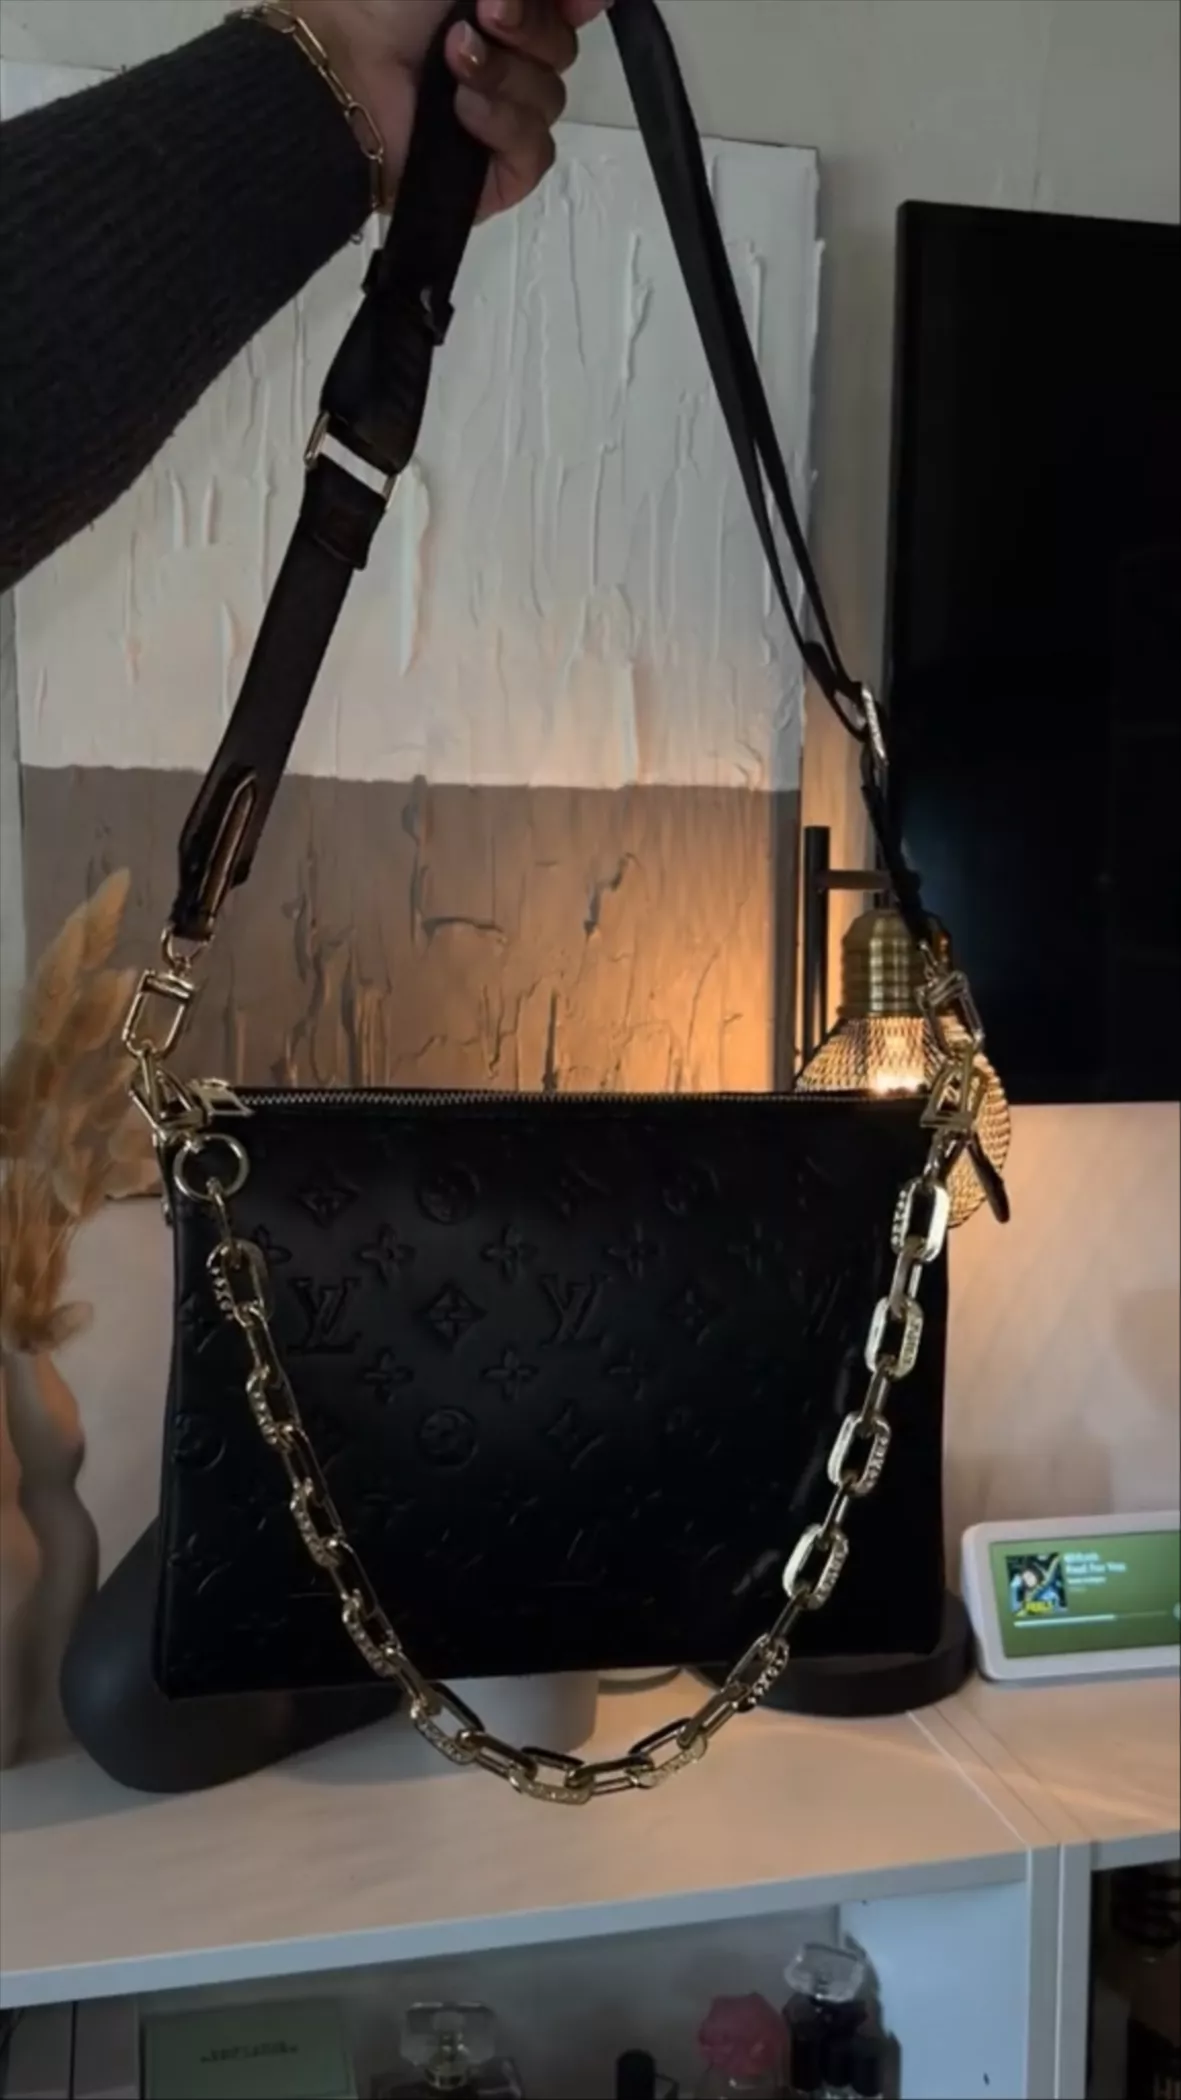 Louis Vuitton Black - 1,808 For Sale on 1stDibs  dhgate lv pouch, dhgate  louis vuitton bag, dhgate louis vuitton purse